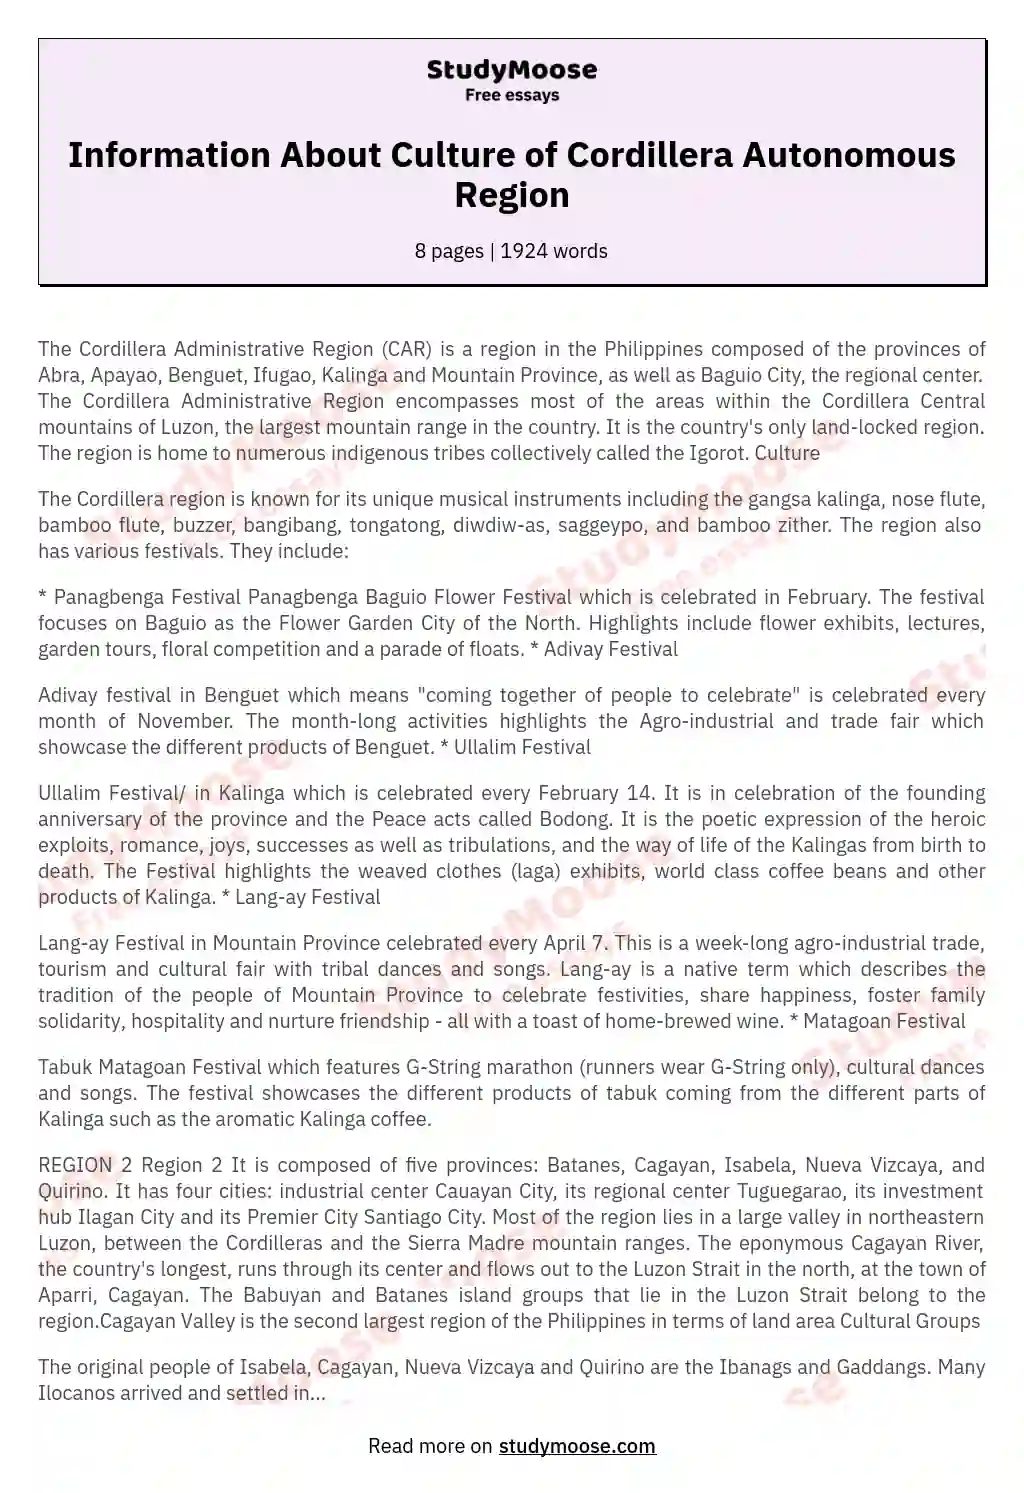 Information About Culture of Cordillera Autonomous Region essay